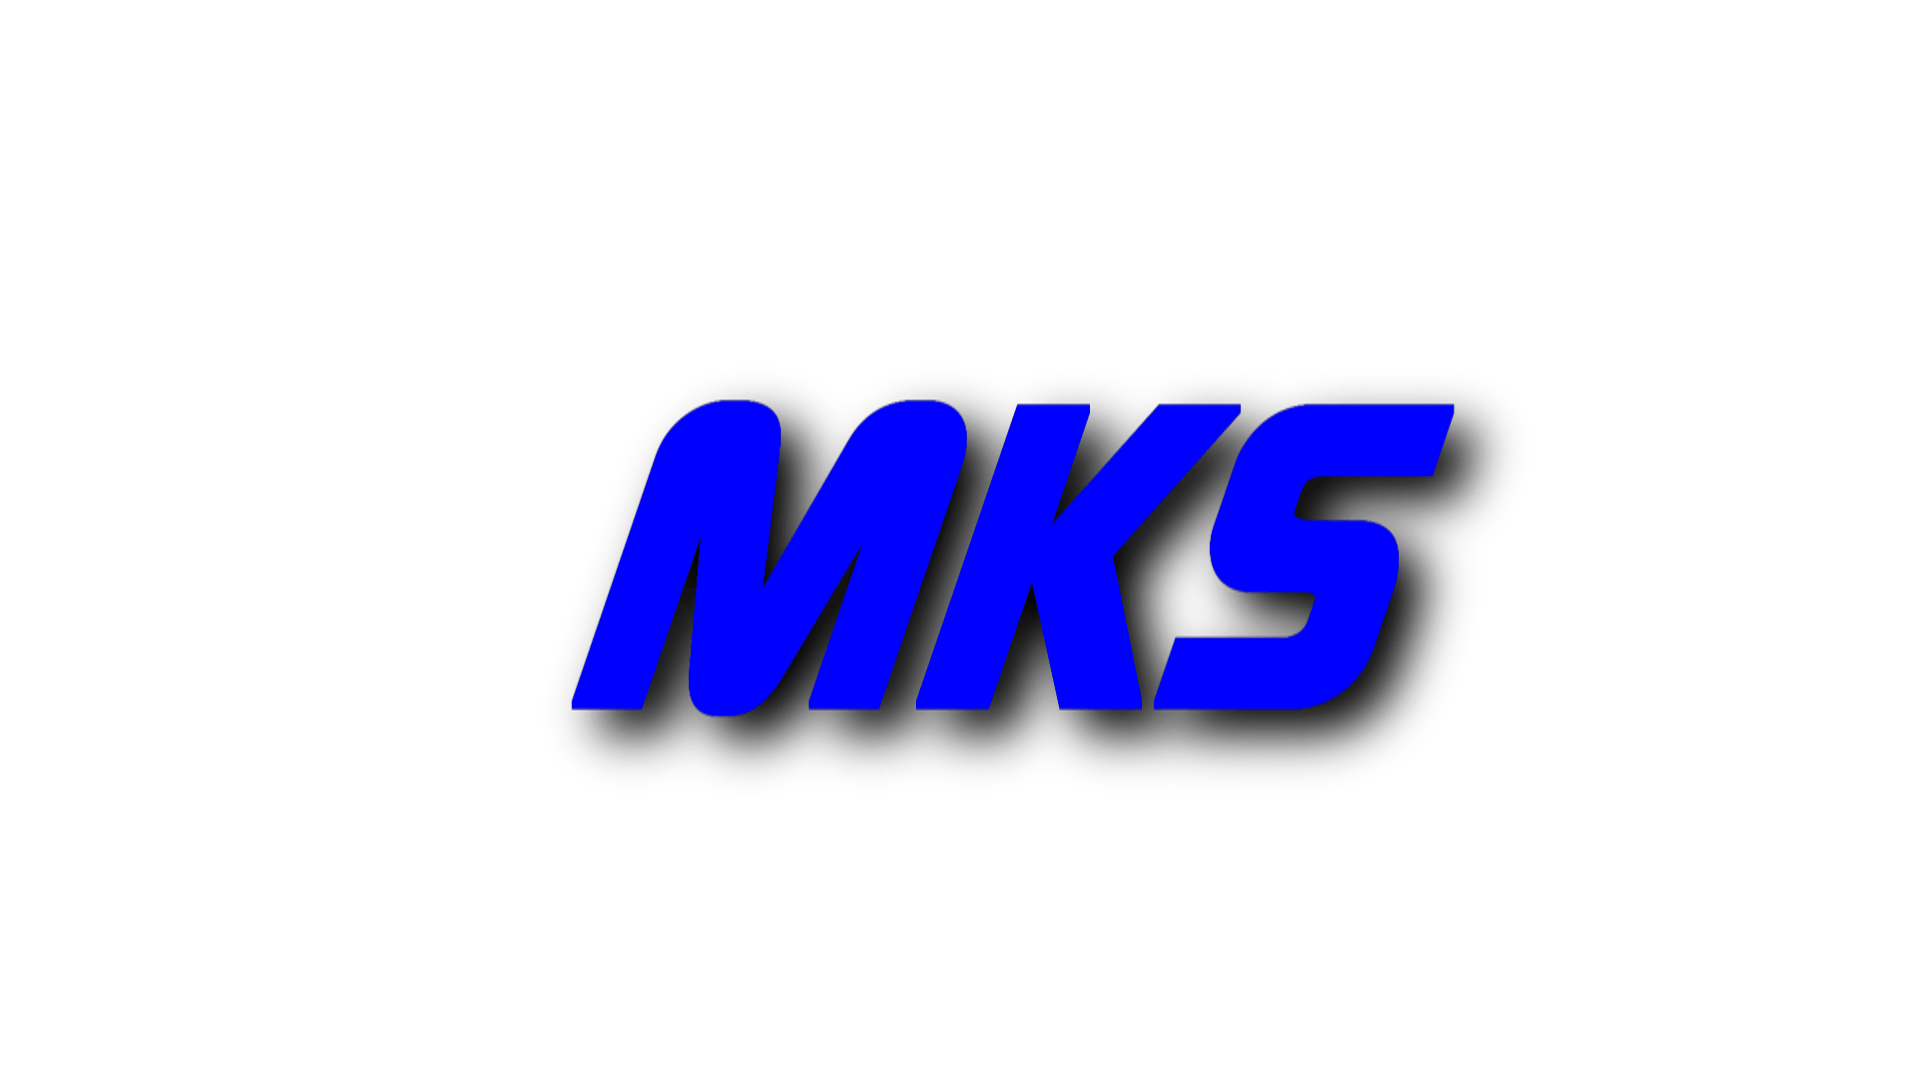 Mks Monogram Vector Logo Three Letters Stock Vector (Royalty Free)  2162065905 | Shutterstock